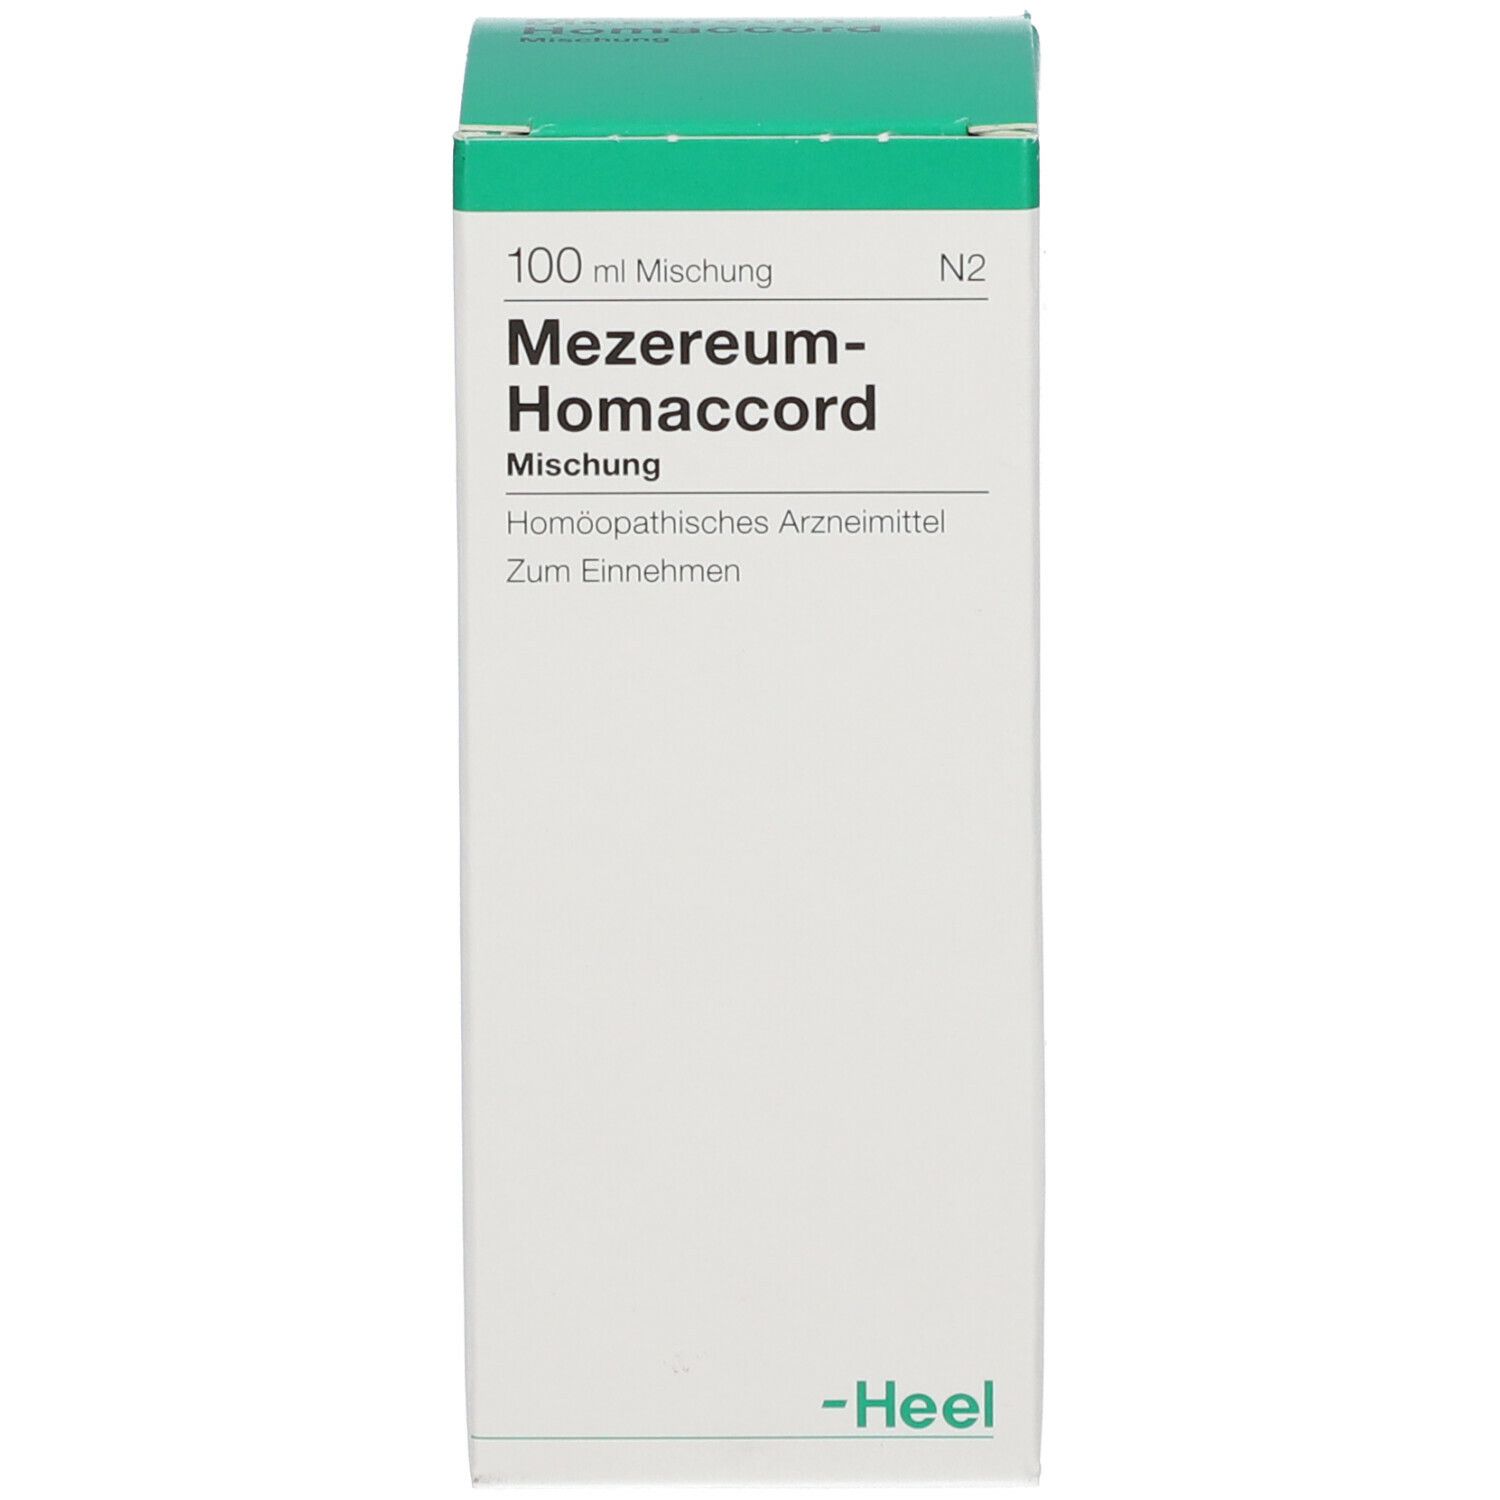 Mezereum-Homaccord® Mischung